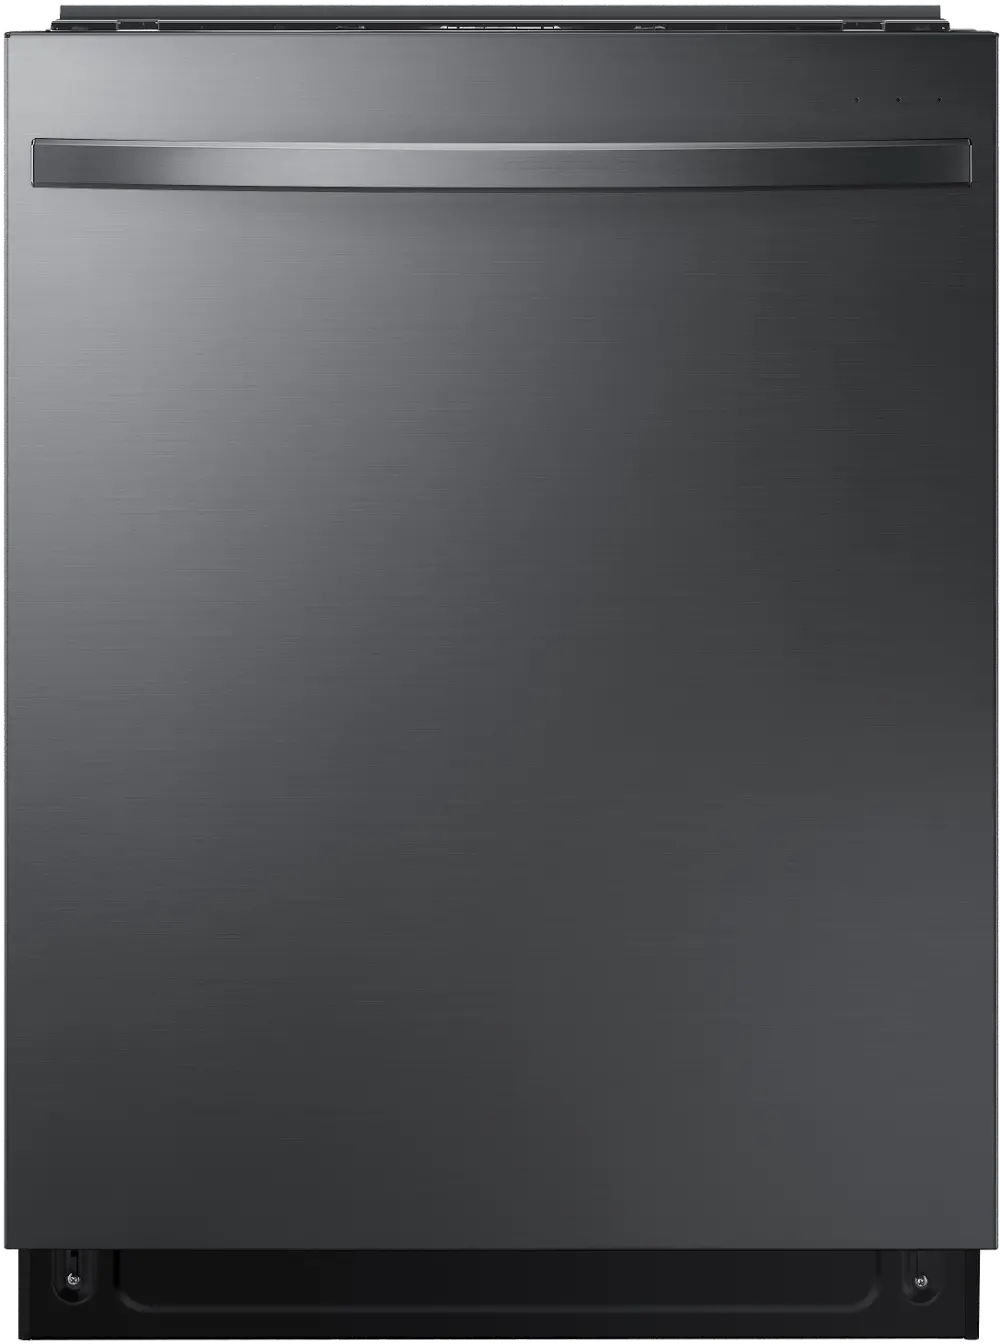 DW80R7061UG Samsung Top Control Dishwasher - Black Stainless Steel-1